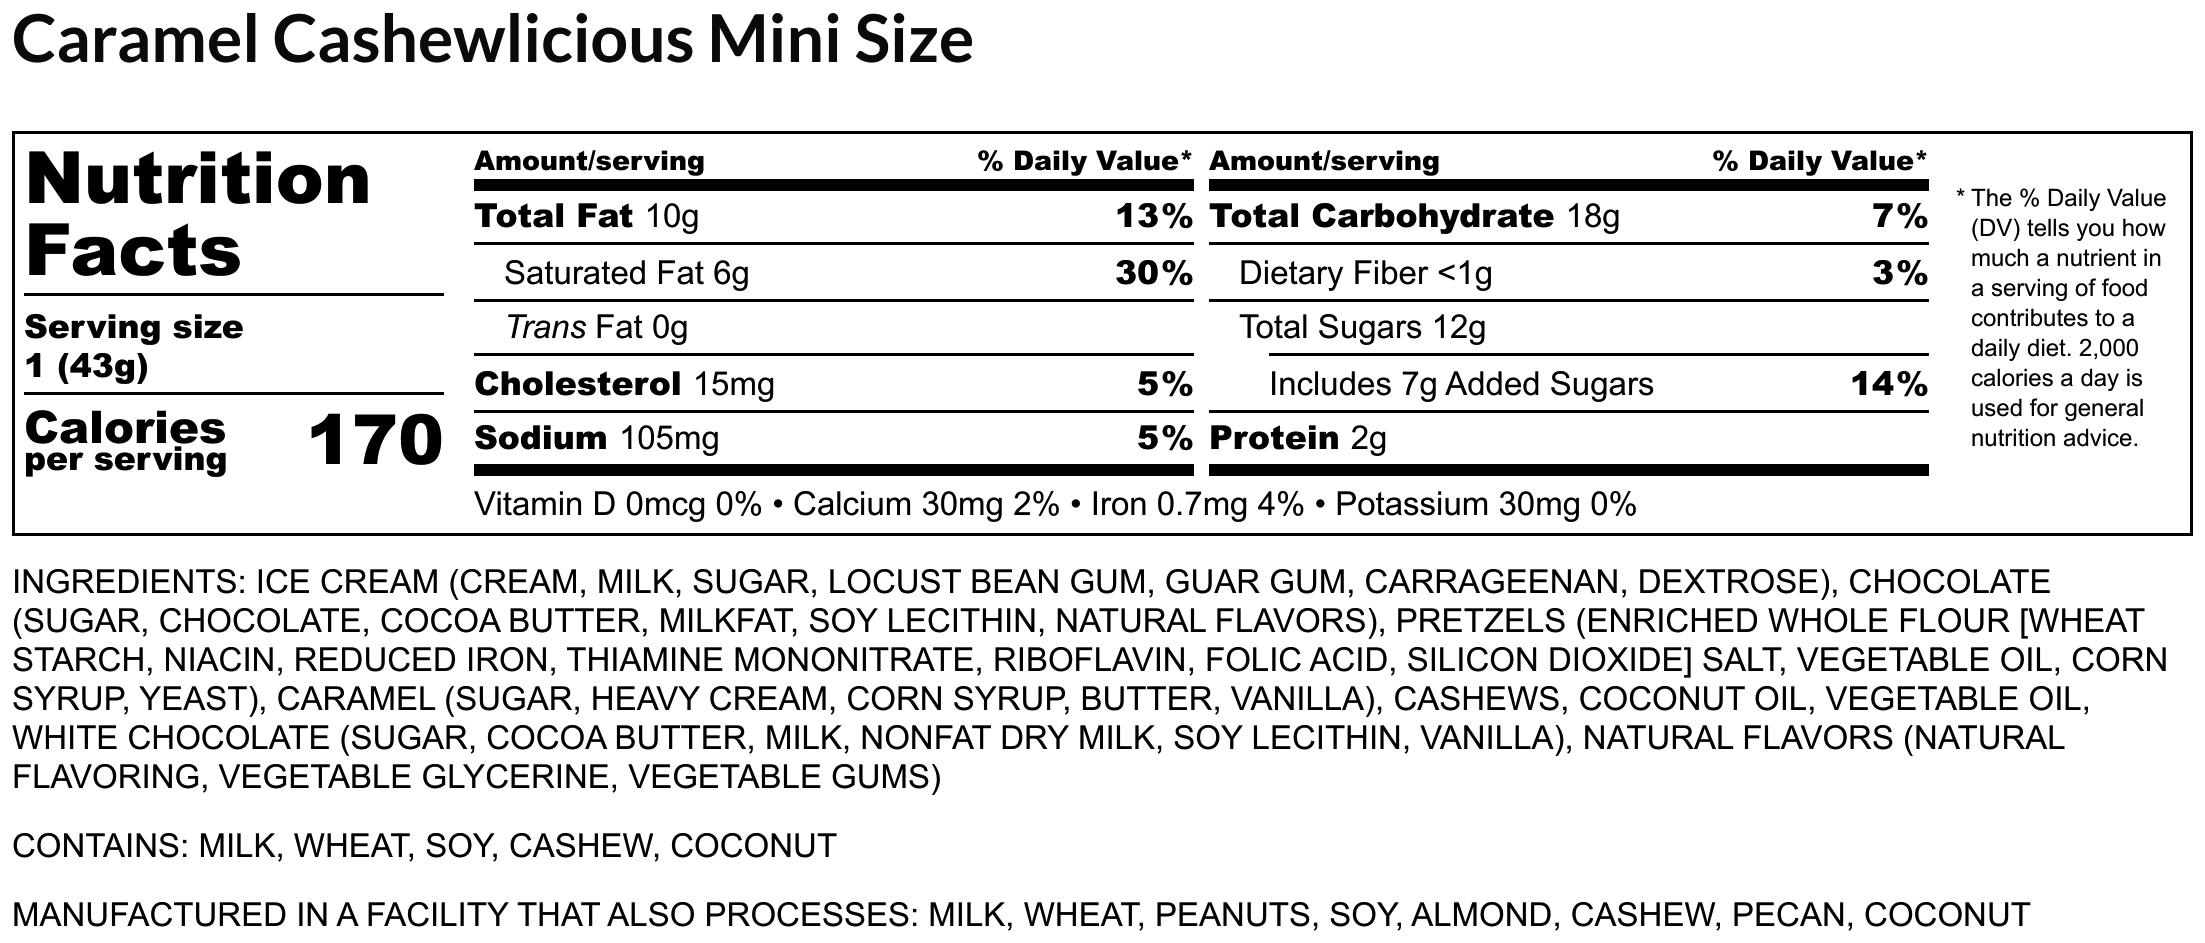 Caramel Cashewlicious Mini Size